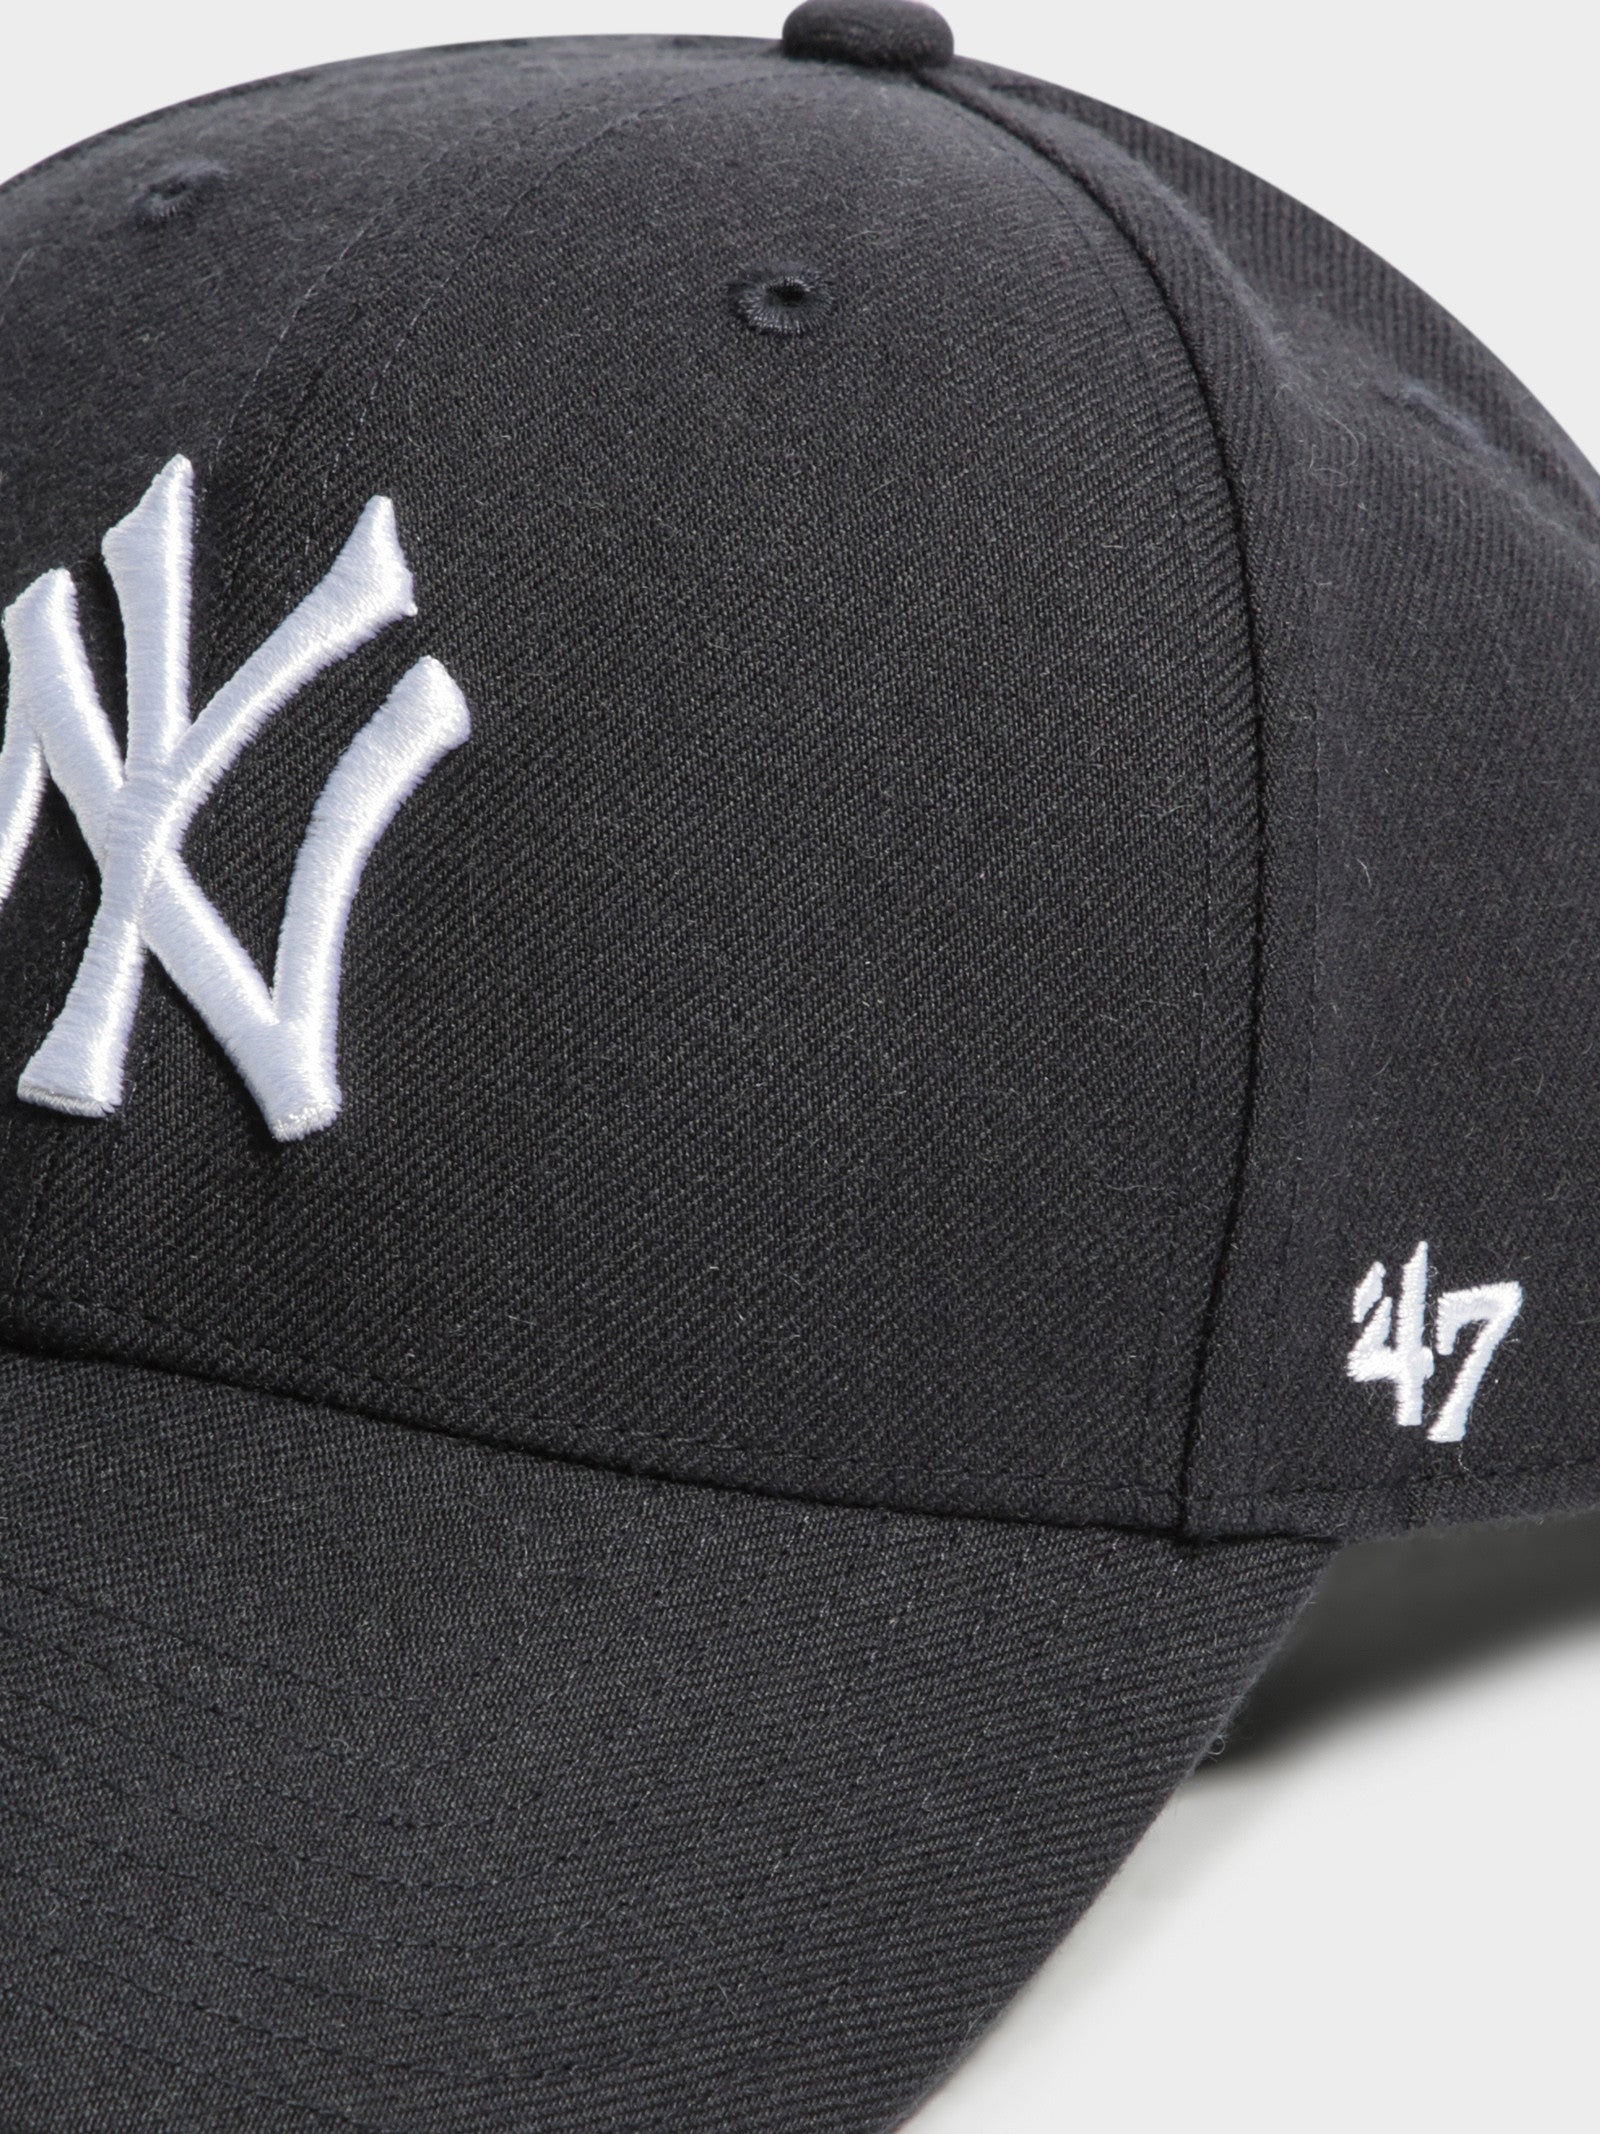 Genuine Merchandise Girl's Large New York NY Yankees Hoodie NEW